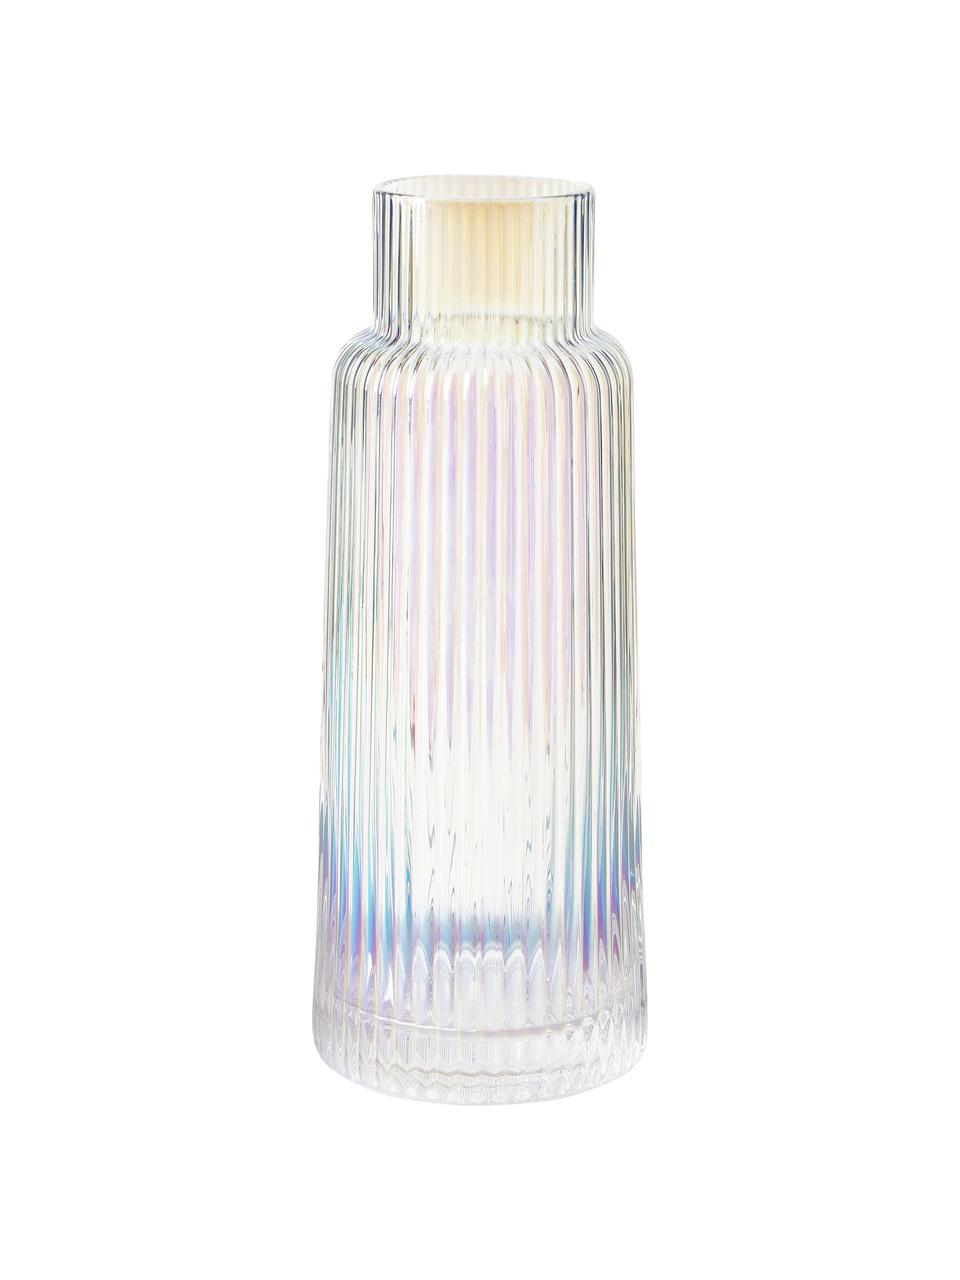 Waterkaraf Minna met iriserend oppervlak van Guglielmo Scilla, 1,1 L, Glas (kalk-soda), mondgeblazen, Transparant, iriserend, 1.1 L